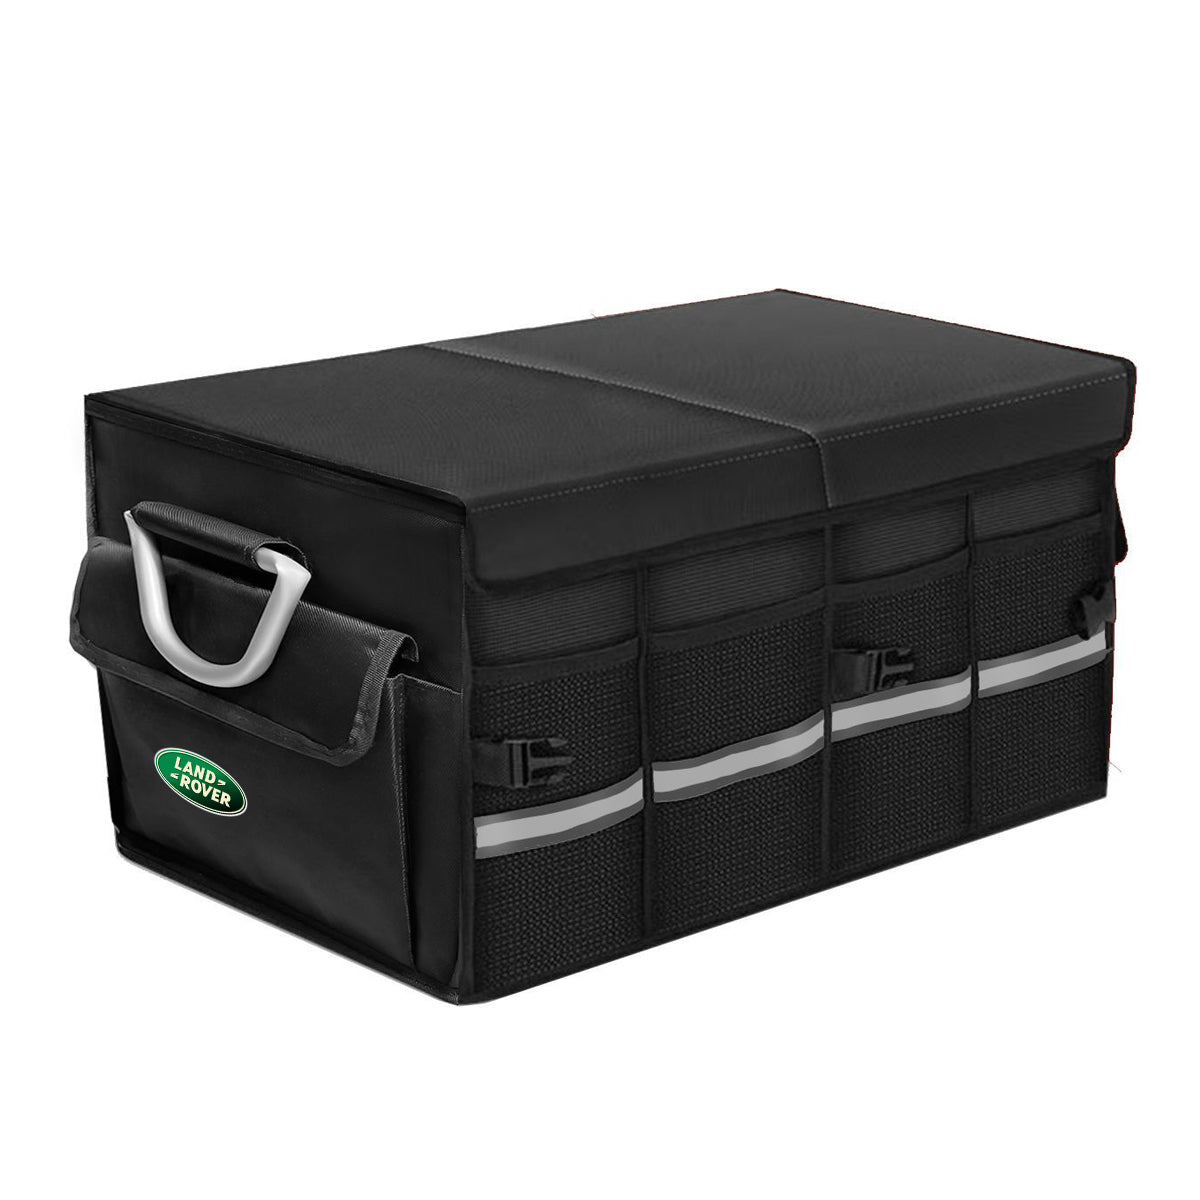 Land Rover Organizer For Car Trunk Box Storage, Car Accessories